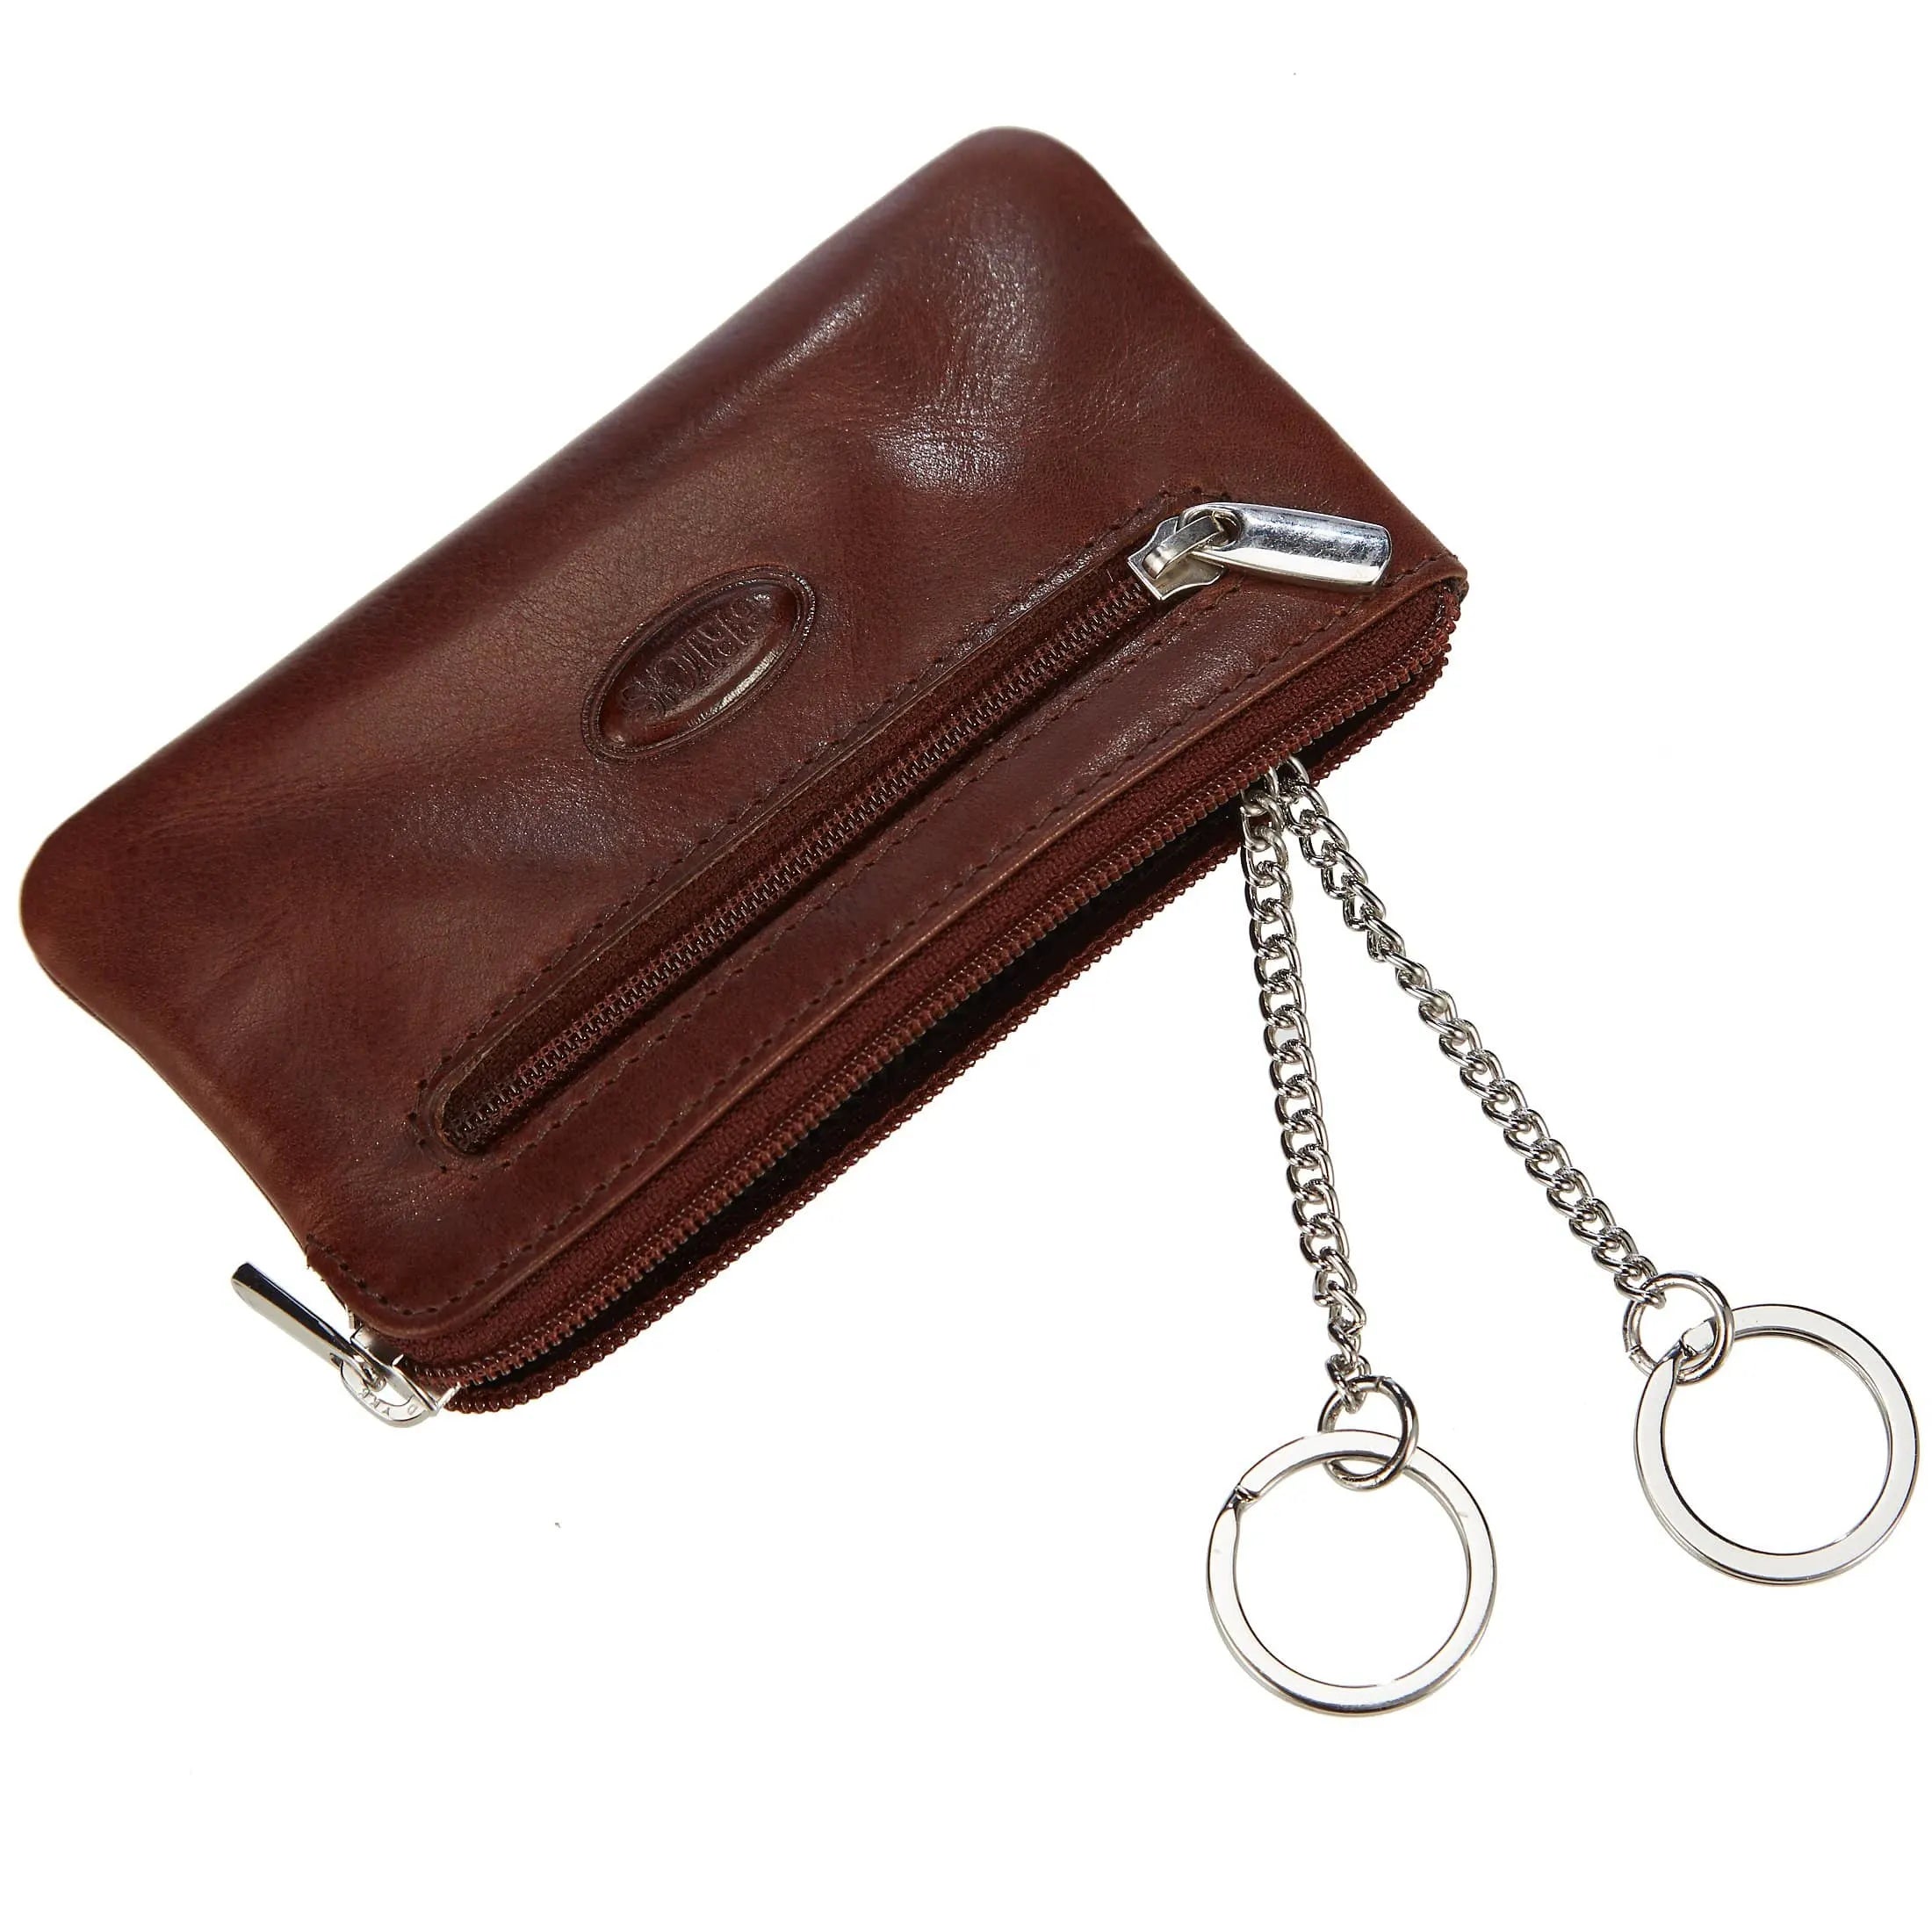 Brics Monte Rosa key case with zipper 12 cm - brown